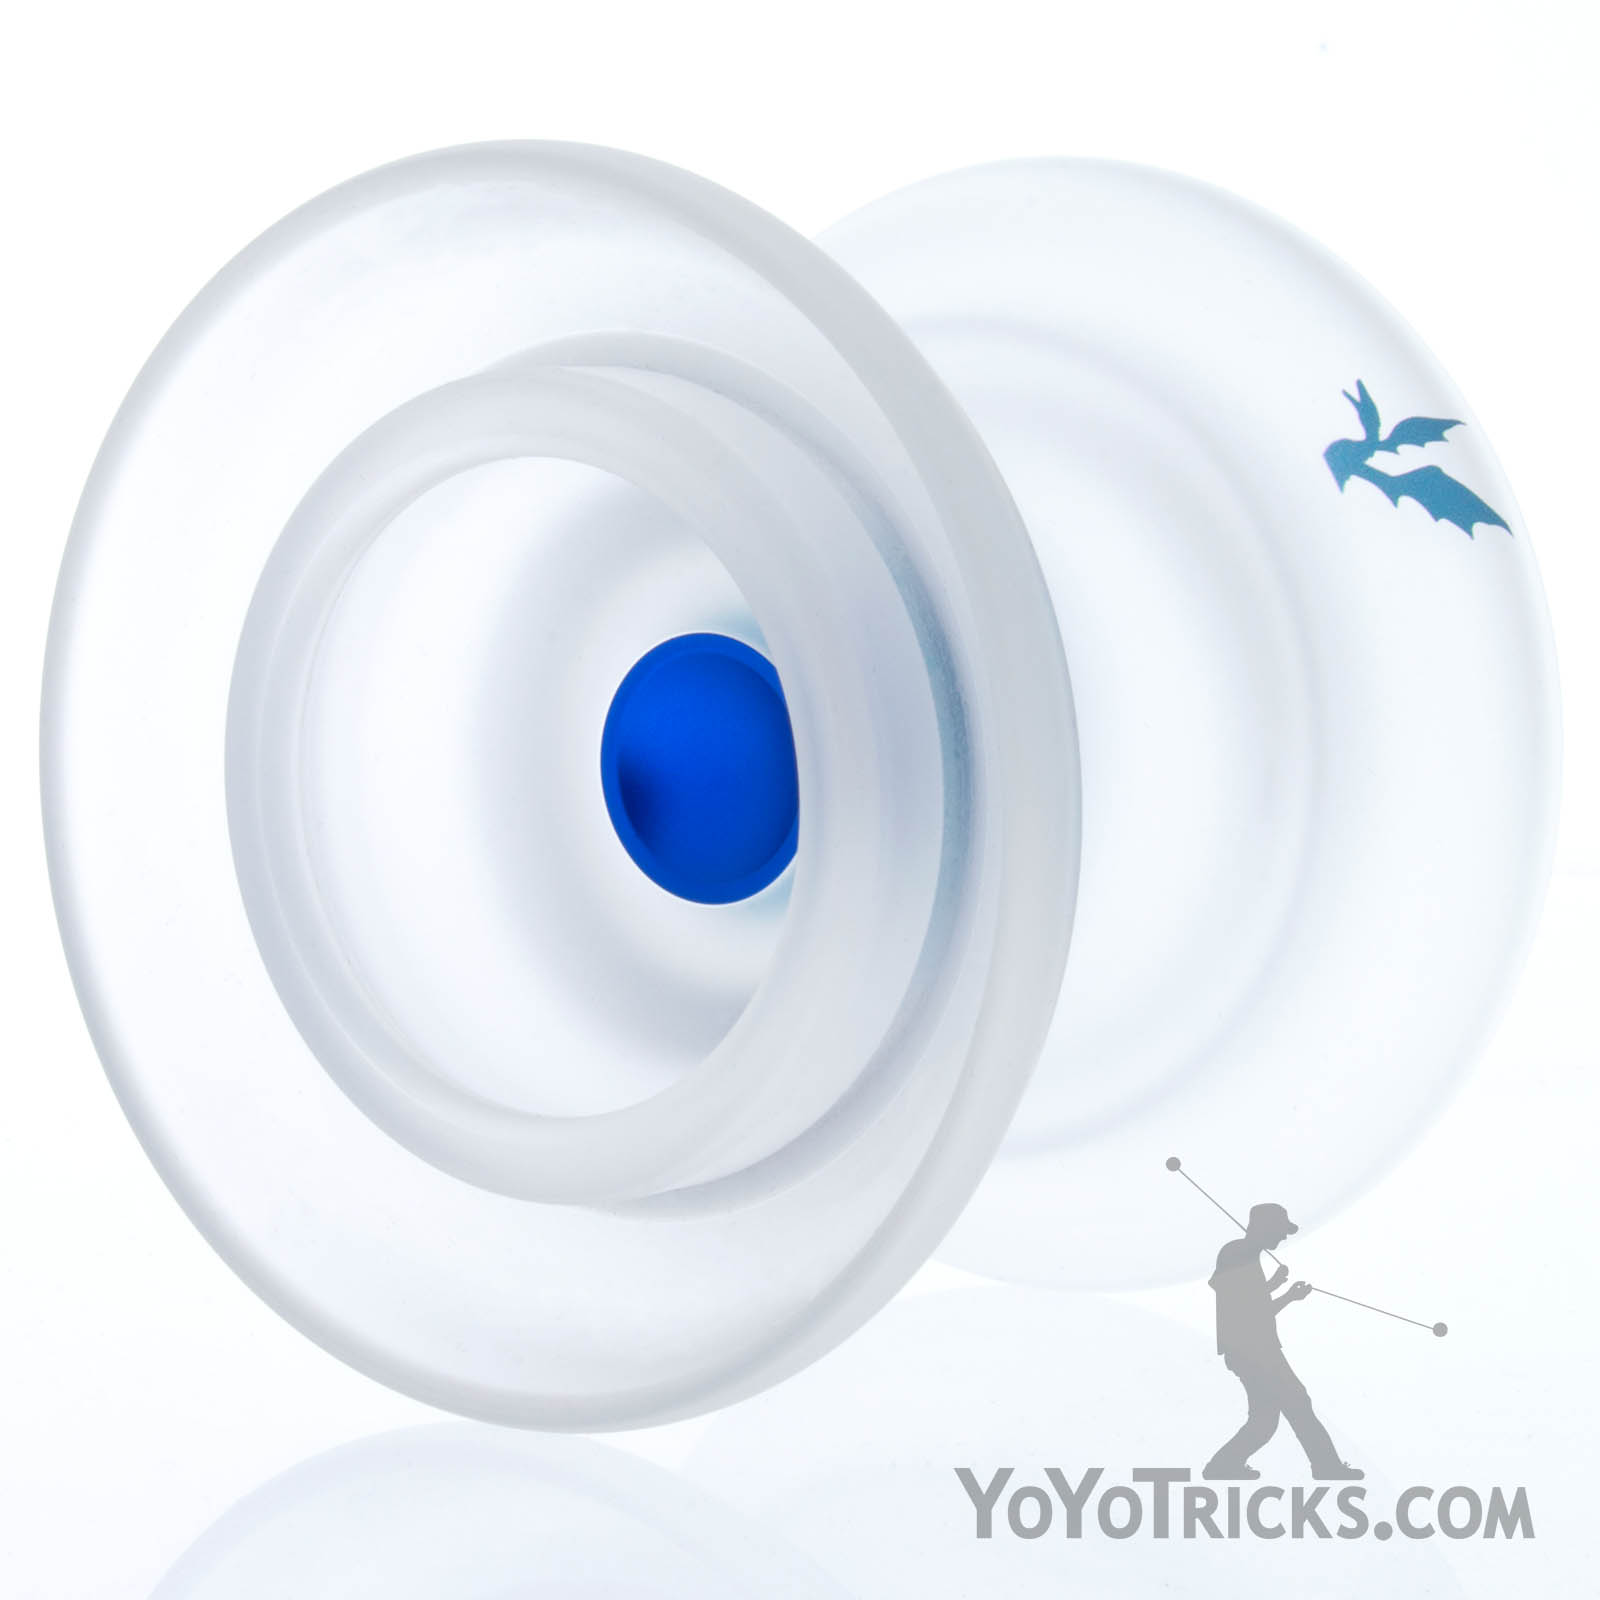 Professionelles Trick-Yo-Yo aus Edelstahl Jojo Profi Jojo schwarz mattiert 